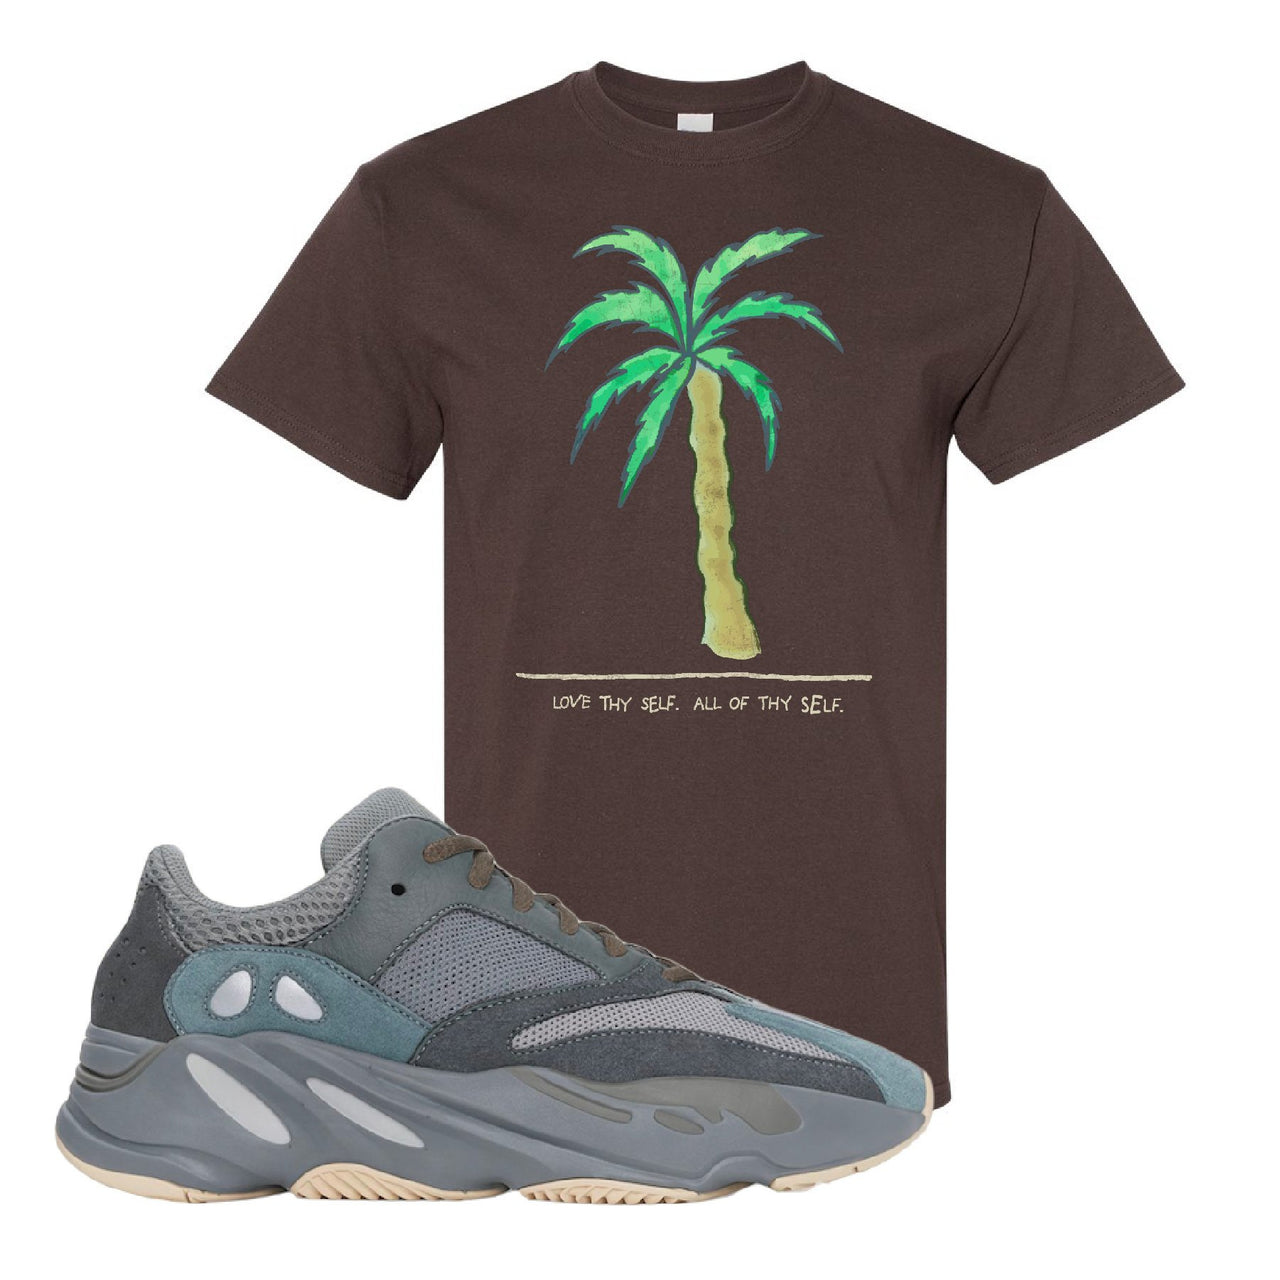 Yeezy Boost 700 Teal Blue Love Thyself Palm Dark Chocolate Sneaker Hook Up T-Shirt